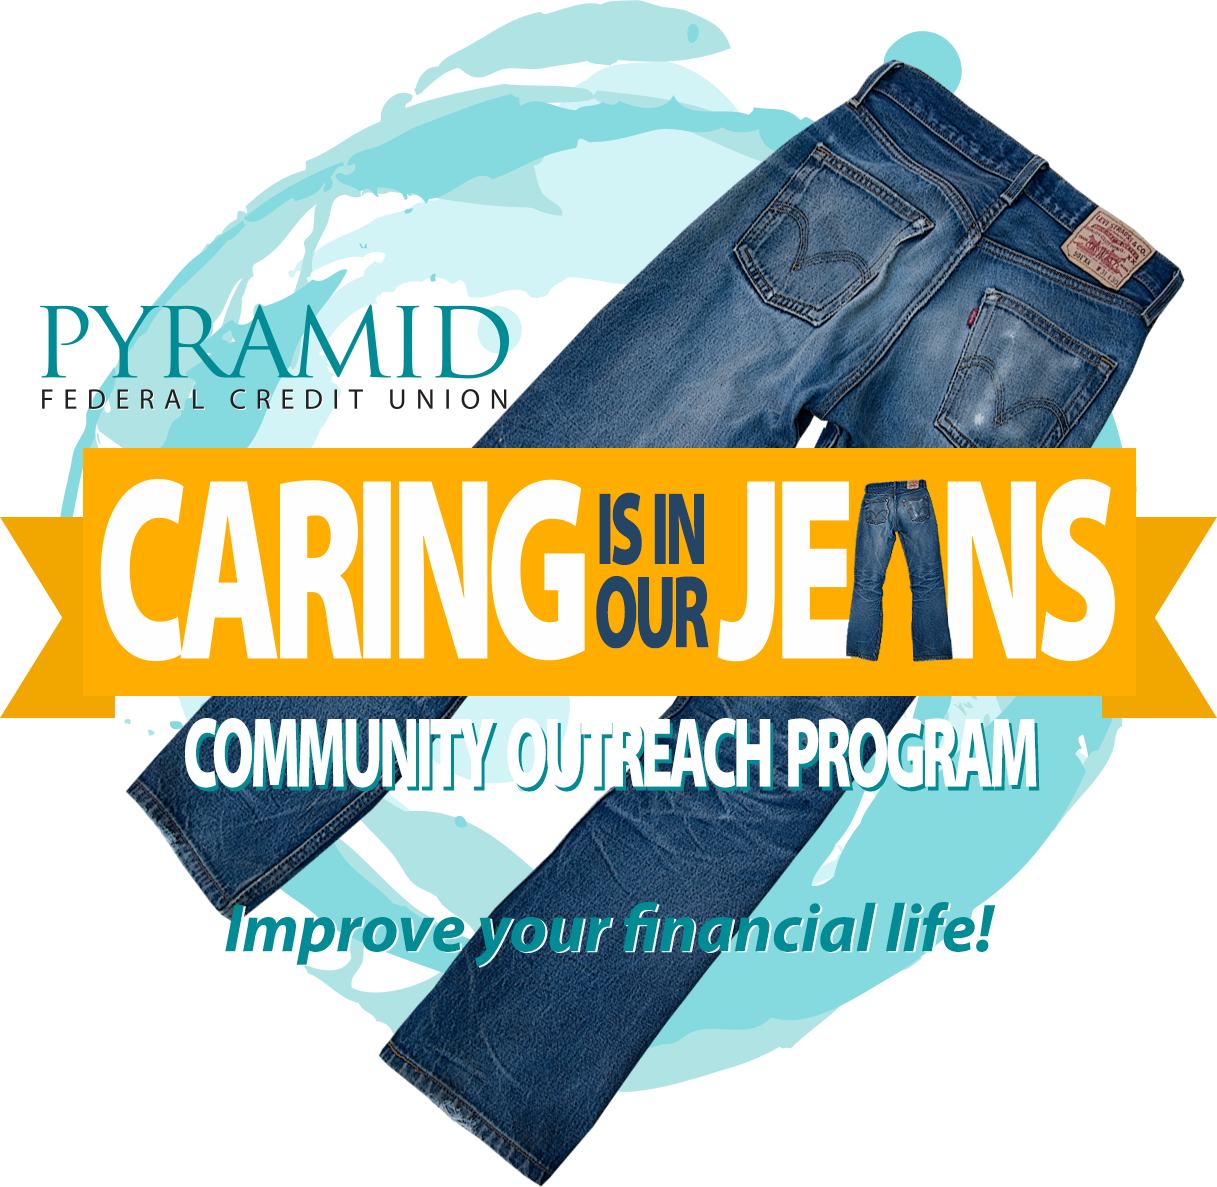 PFCU_CaringJeans_logo_Mar18.png